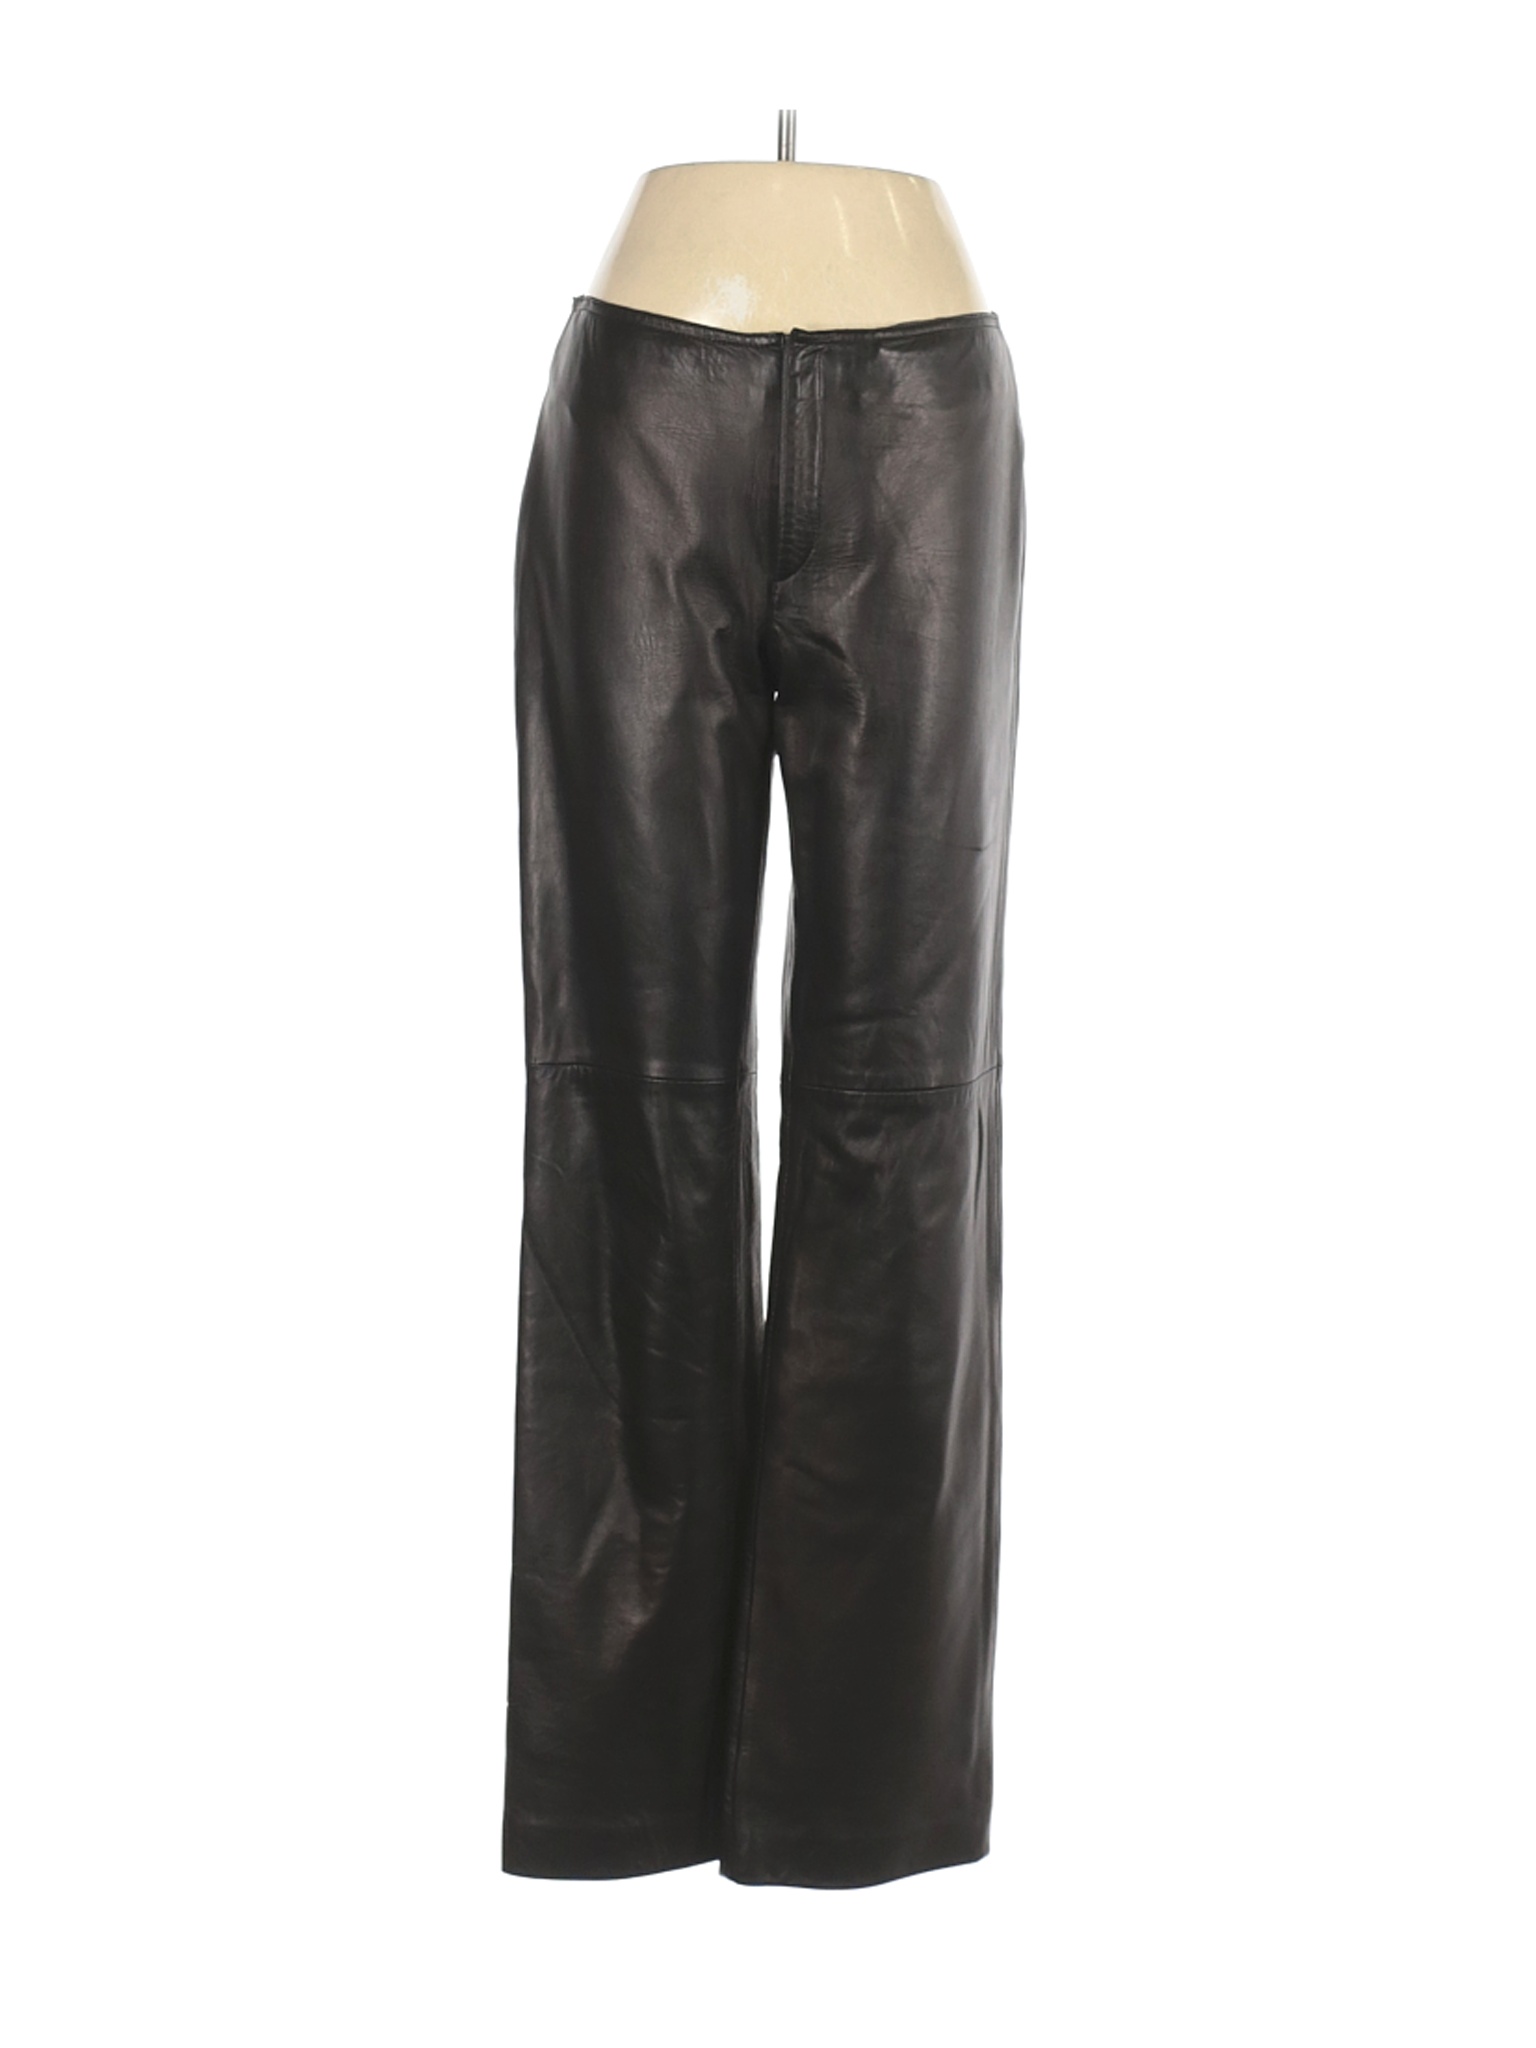 Banana Republic Women Black Leather Pants 6 | eBay